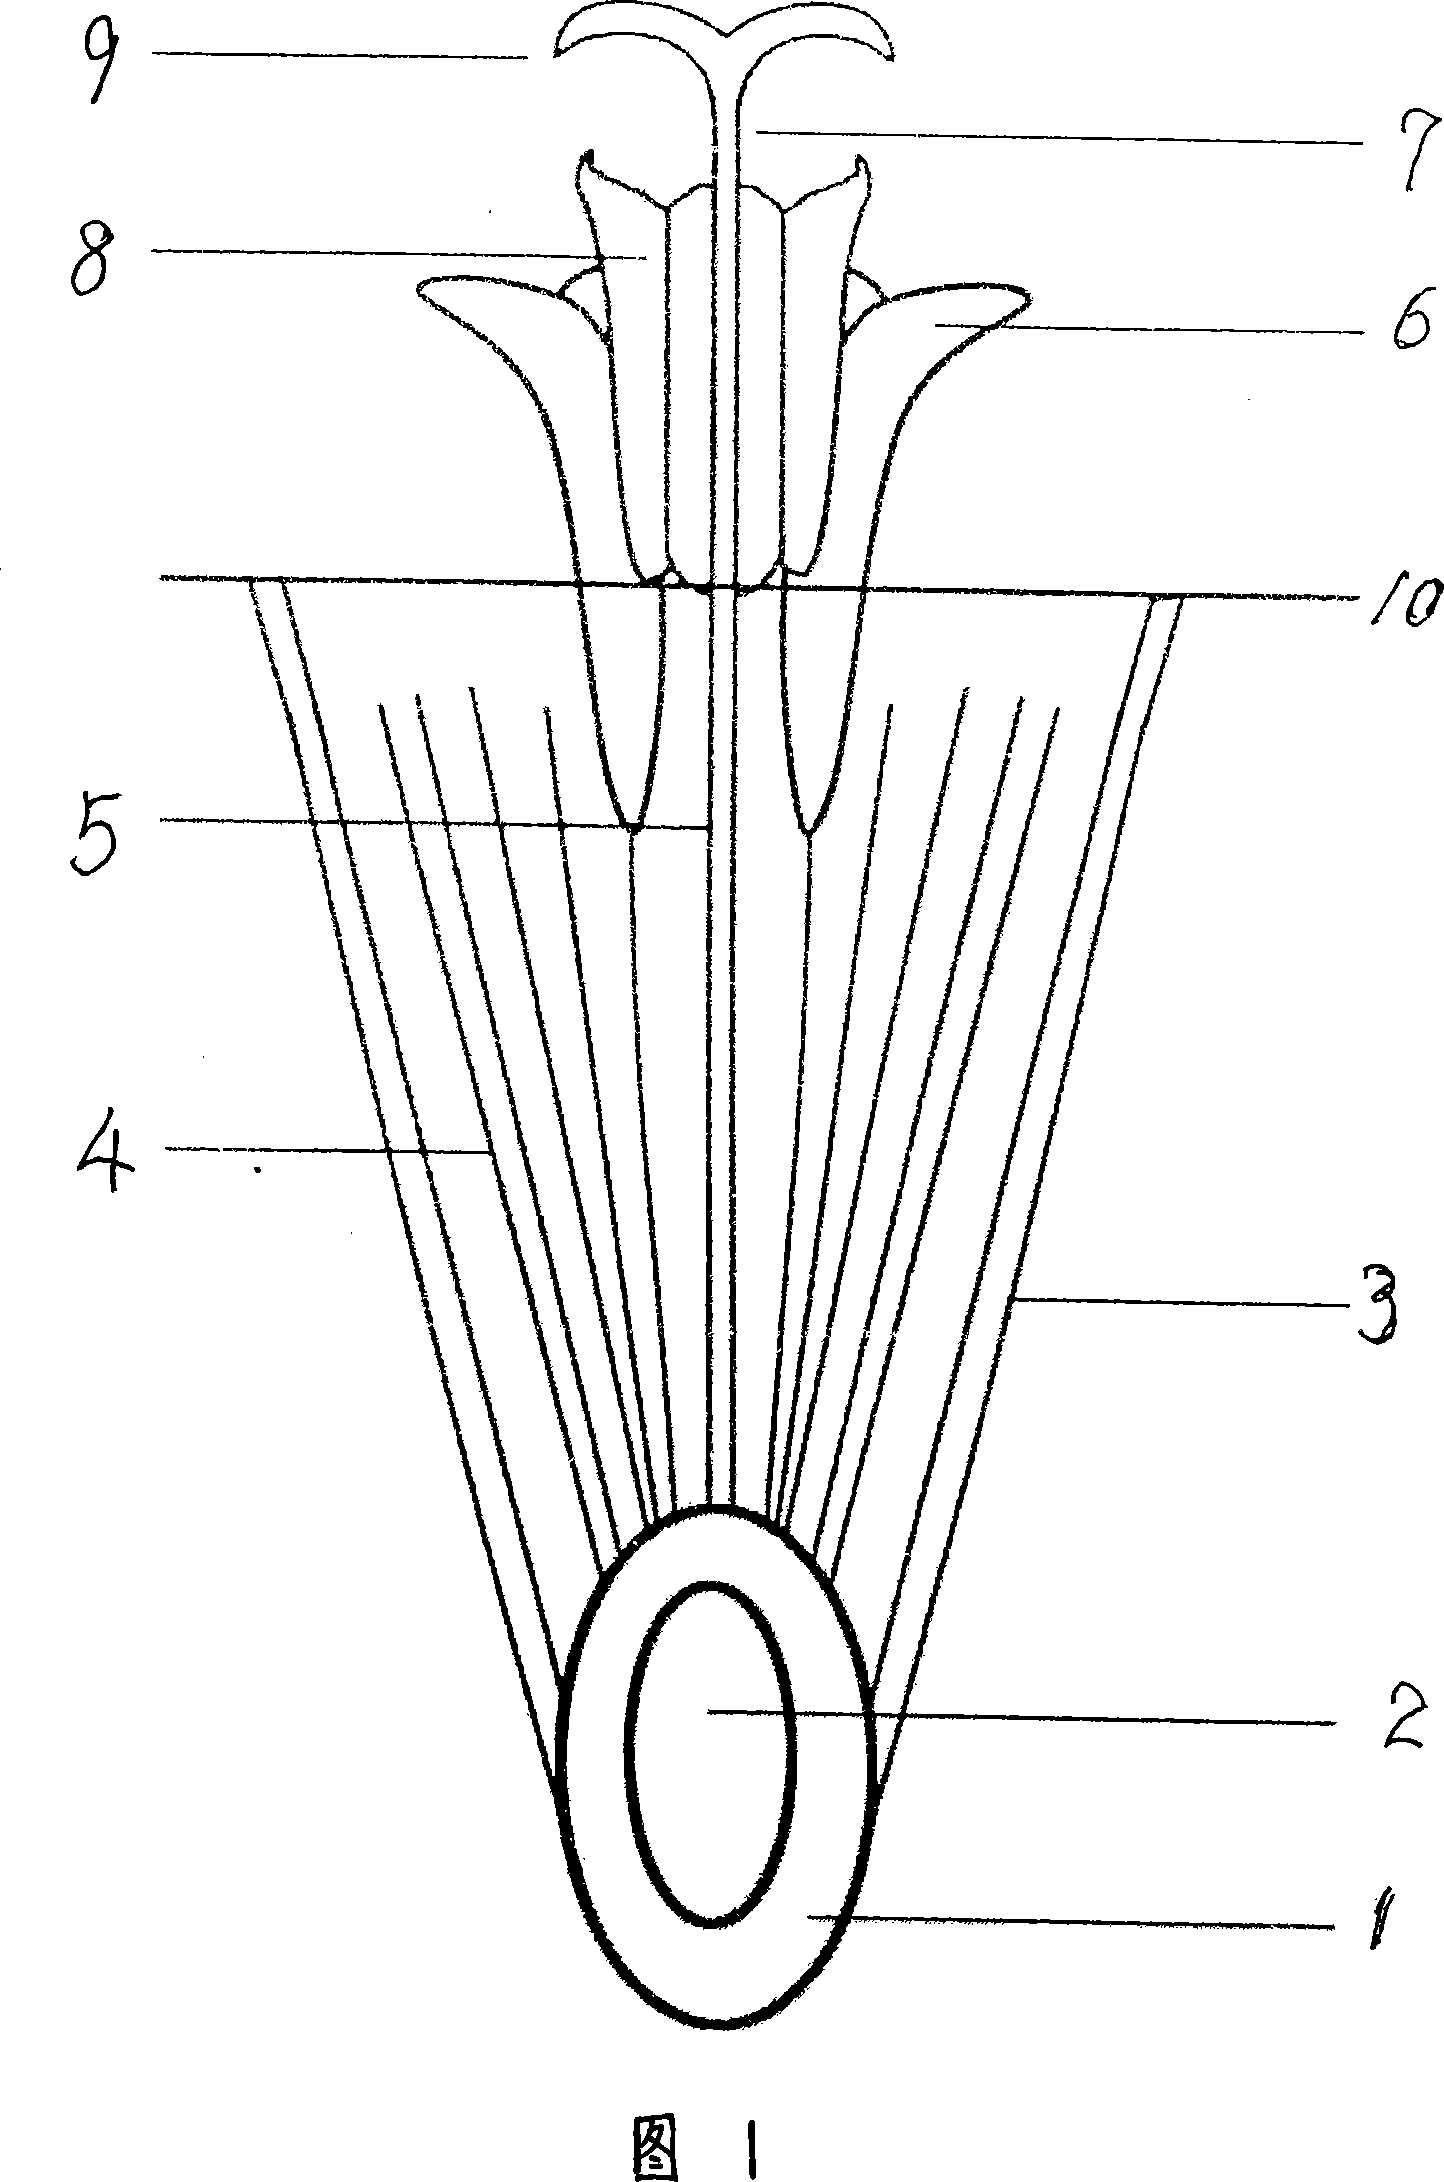 Emasculation method for compositae plants